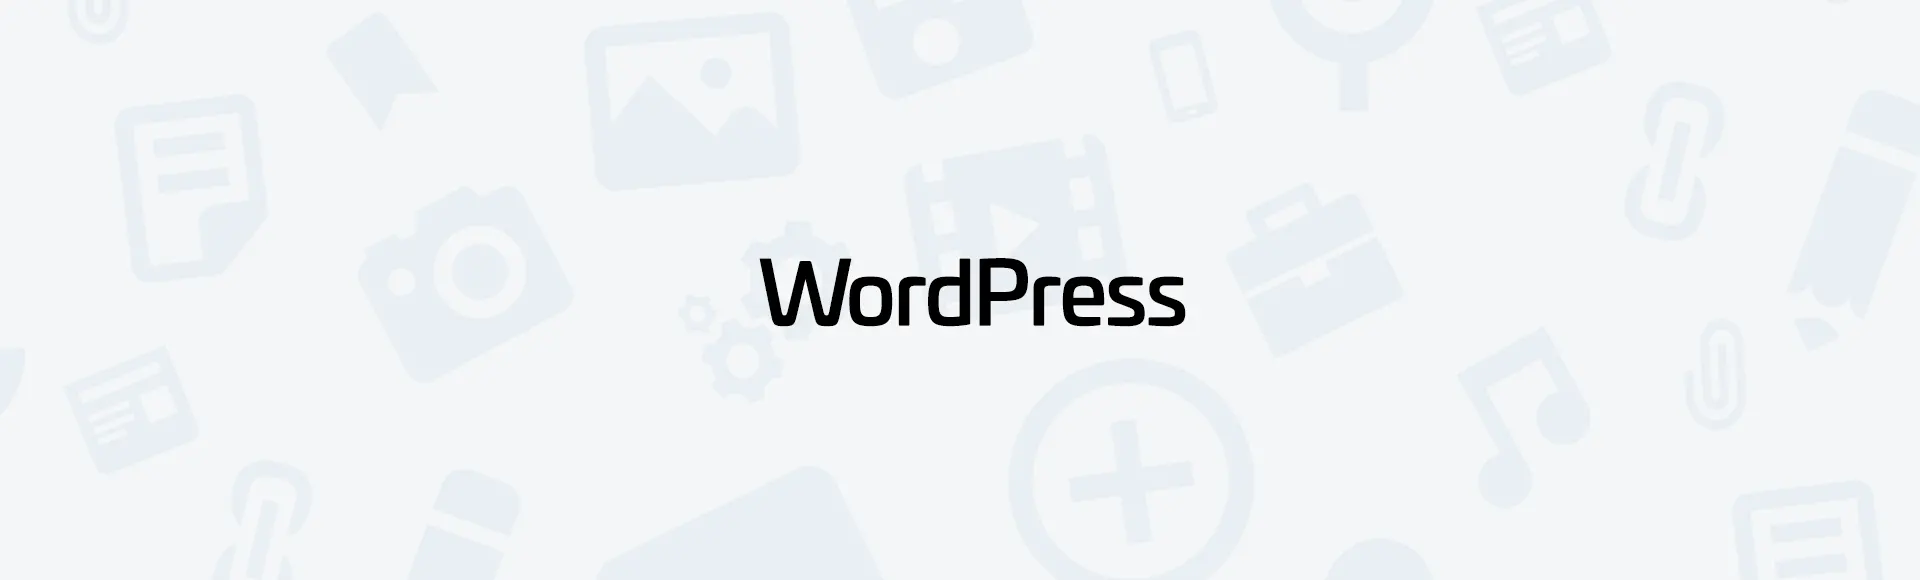 WordPress: List Categories next to their Descriptions